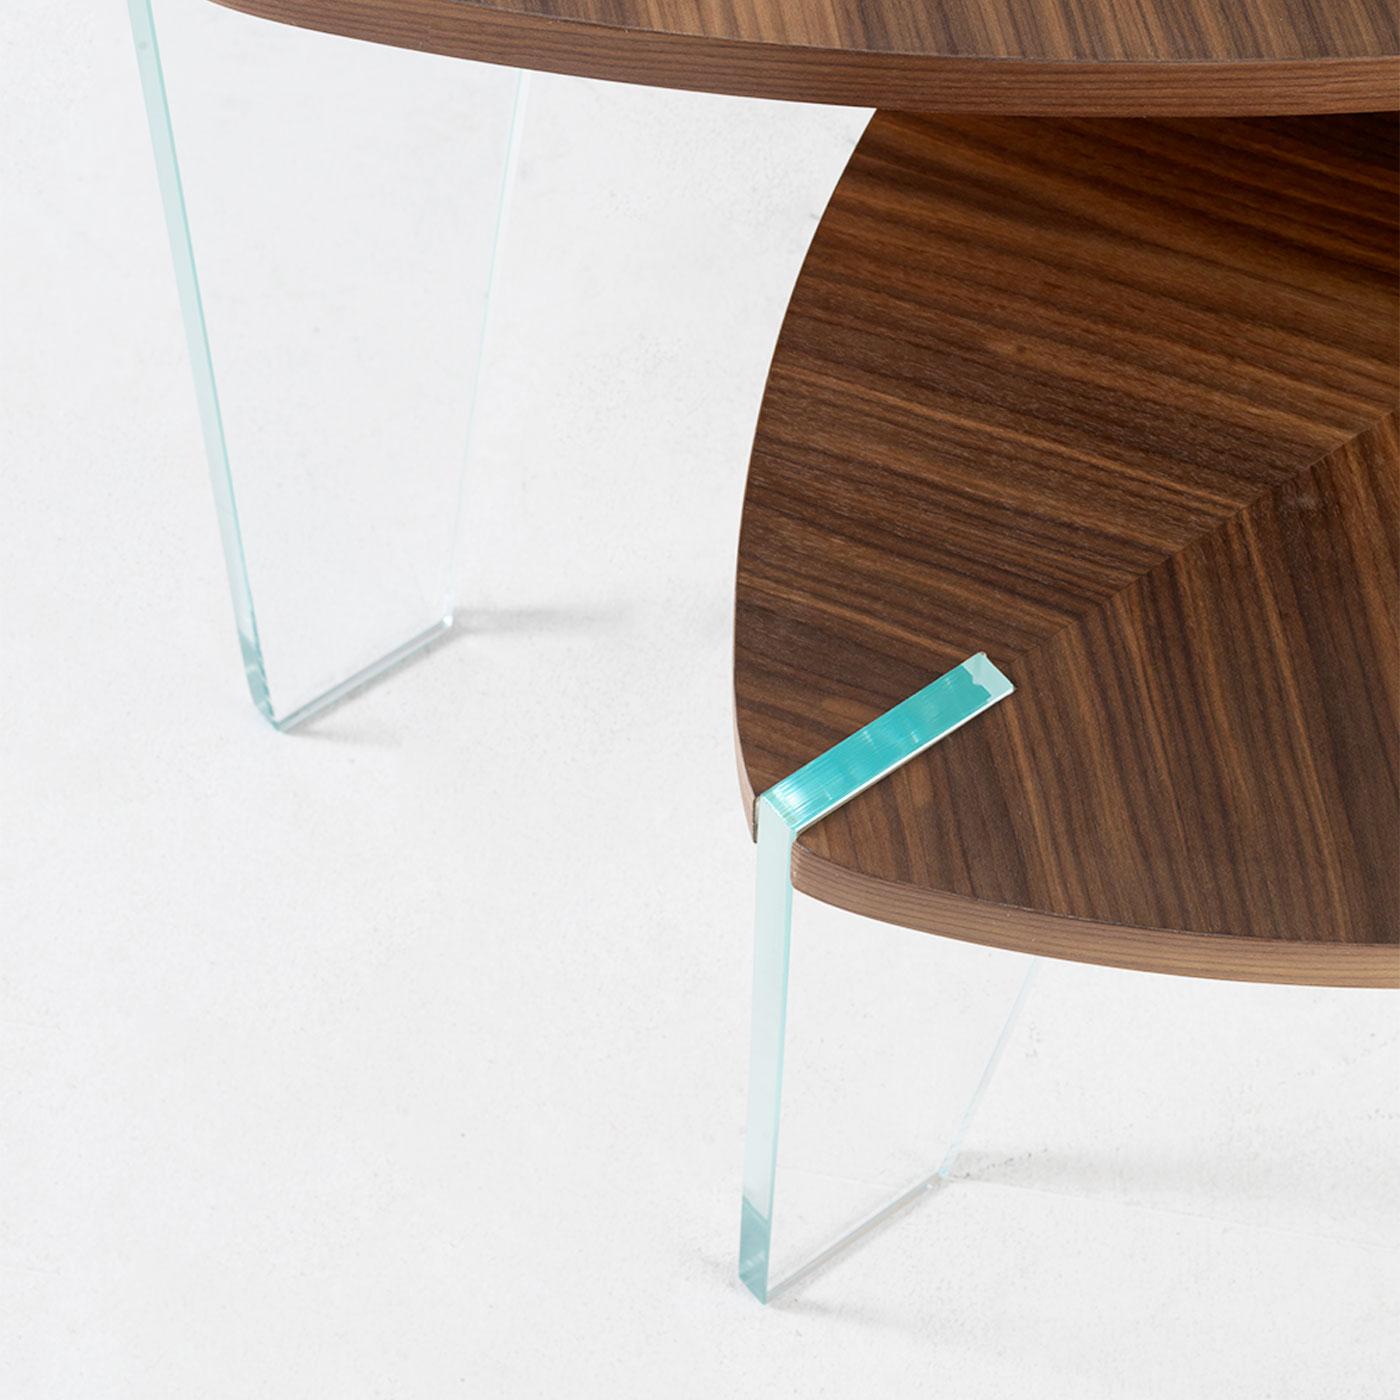 Sospeso Solid Wood Coffee Table, Walnut in Natural Finish, Contemporary In New Condition For Sale In Cadeglioppi de Oppeano, VR